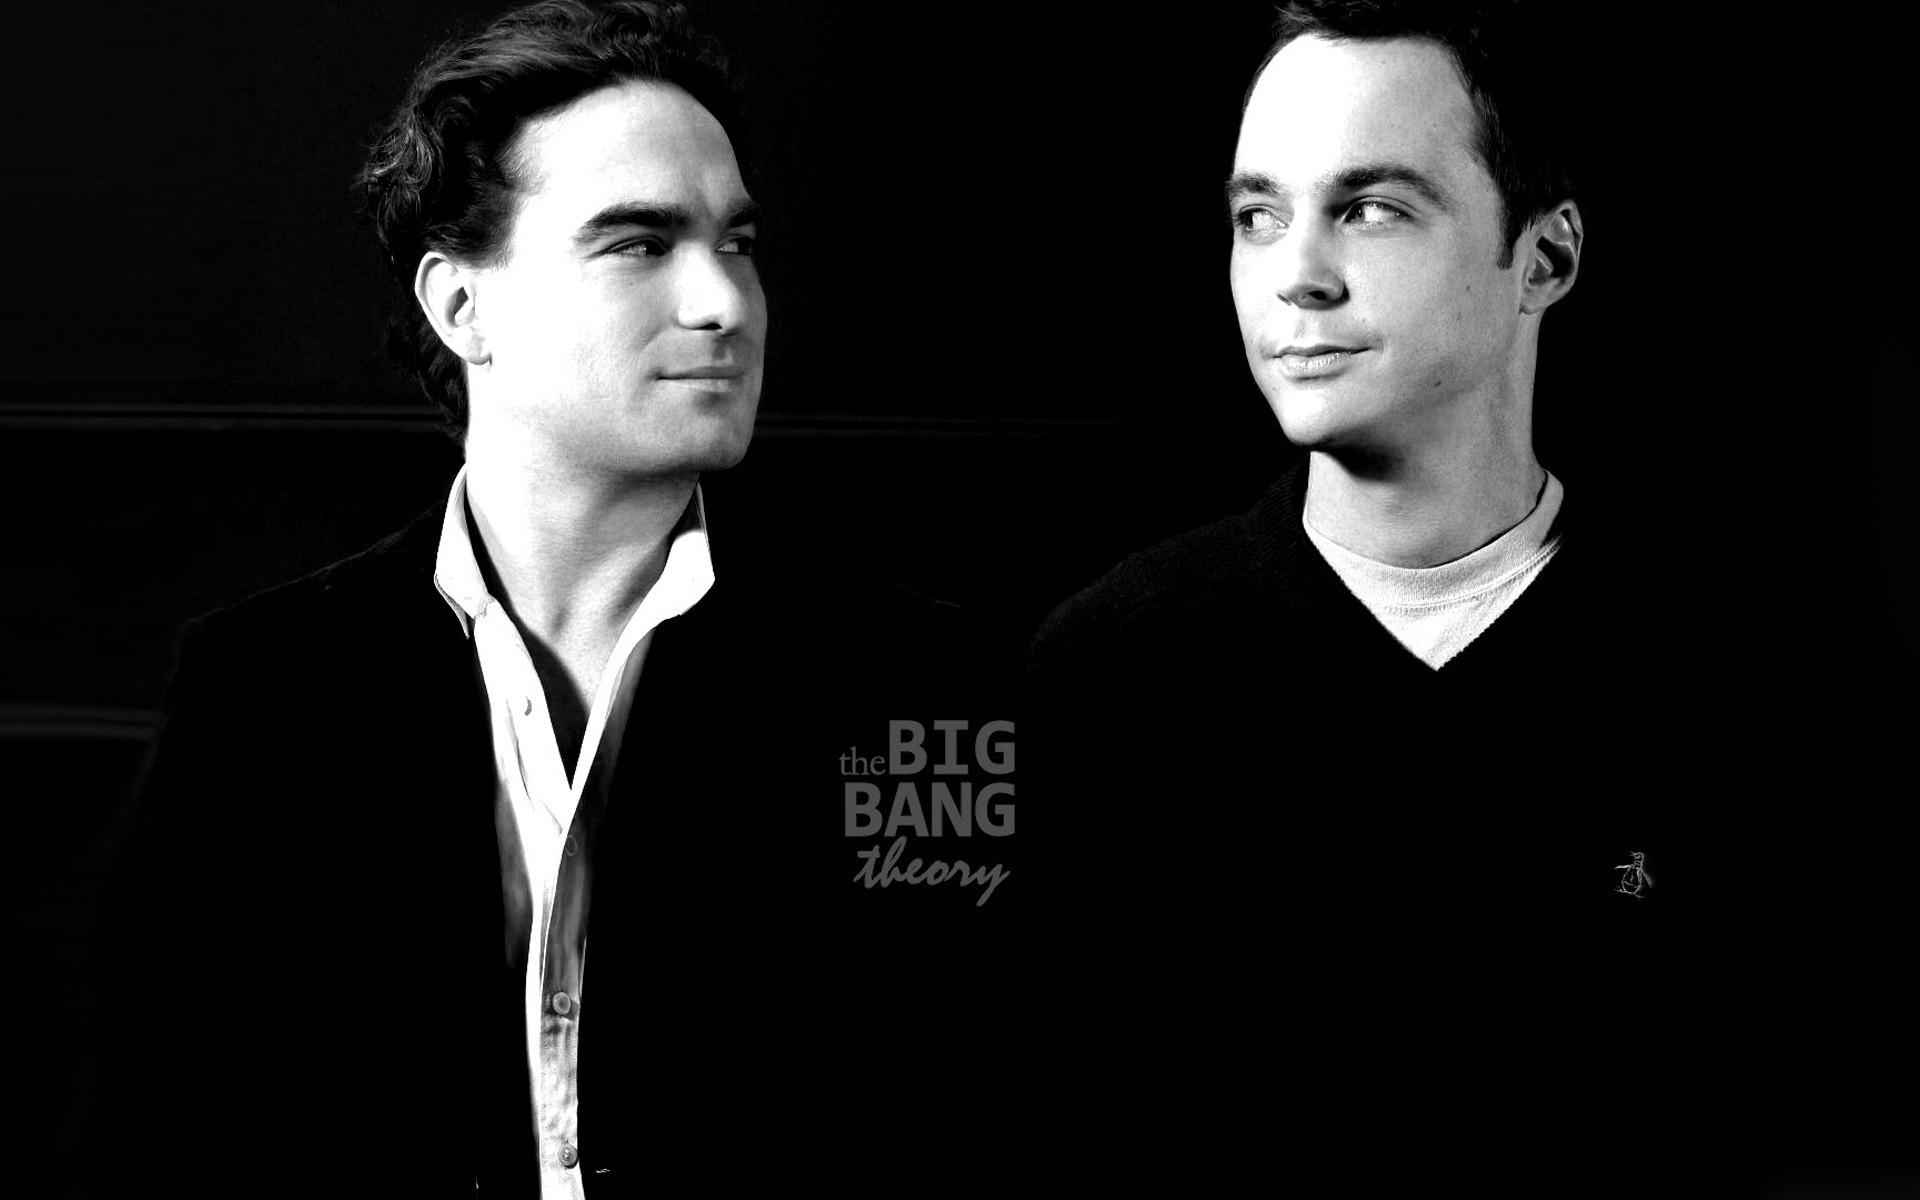 The Big Bang Theory Leonard and Sheldon. Android wallpaper for free